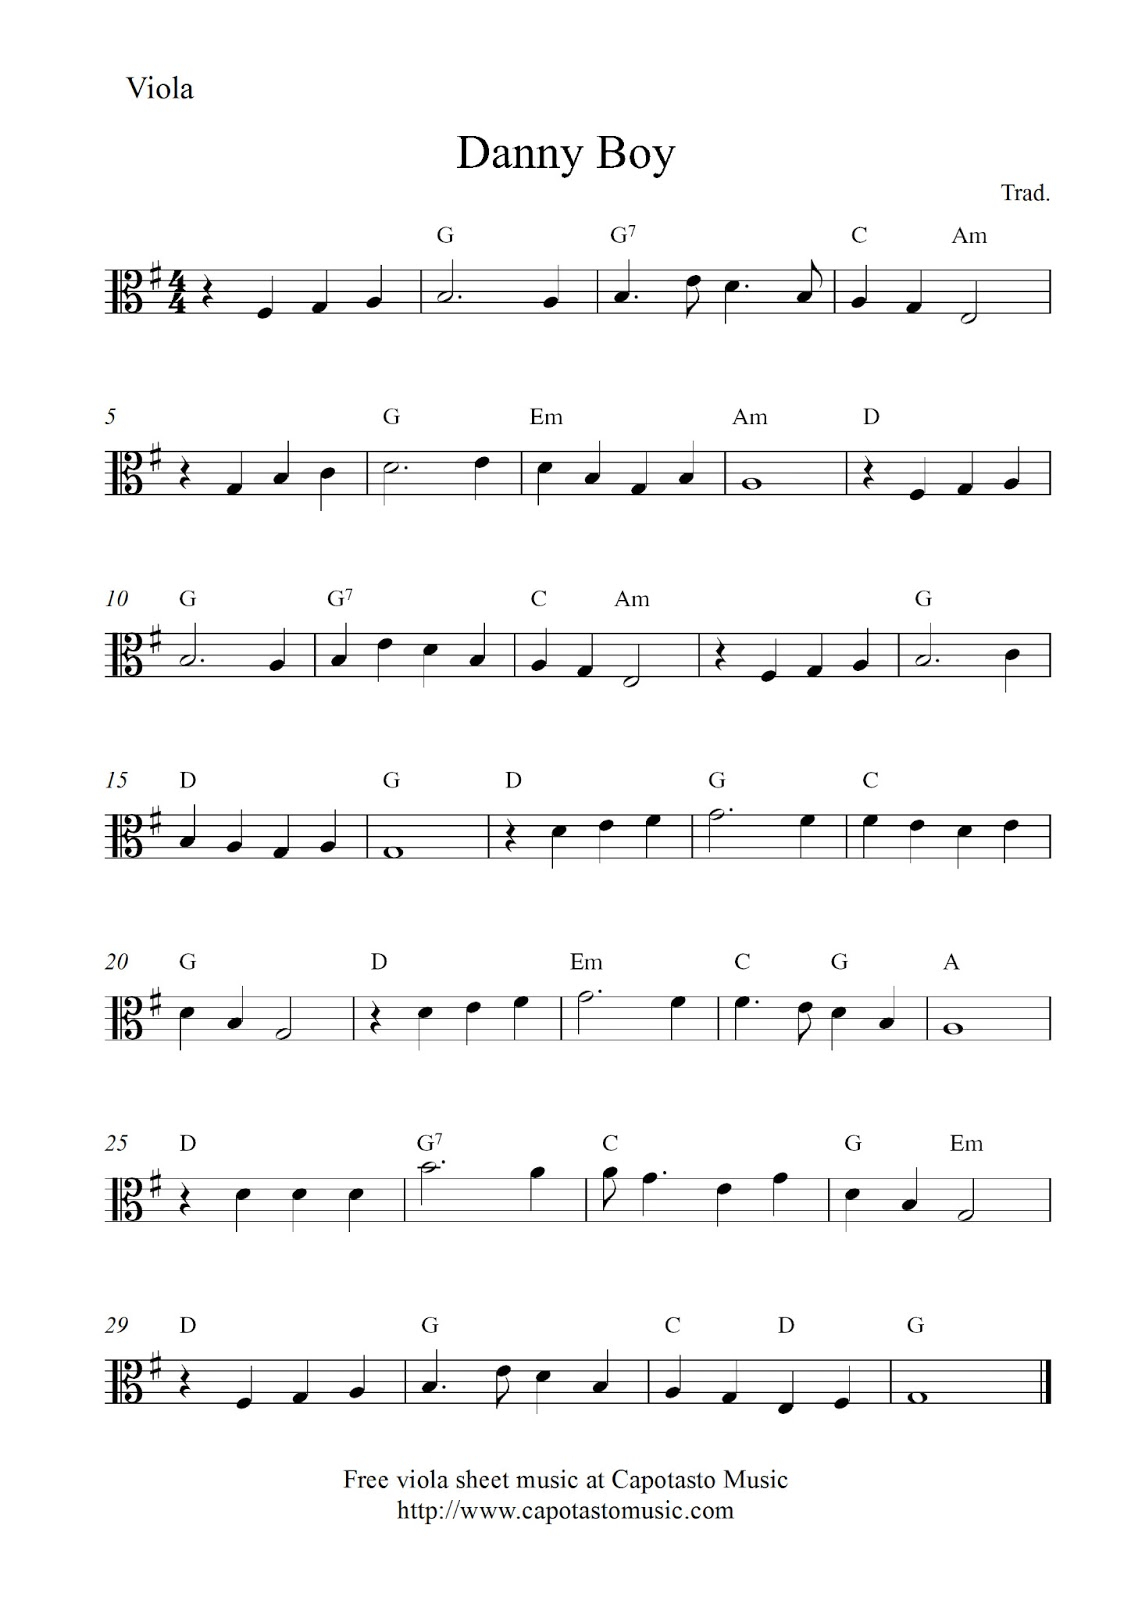 Free Viola Sheet Music Score, Danny Boy - Viola Sheet Music Free Printable